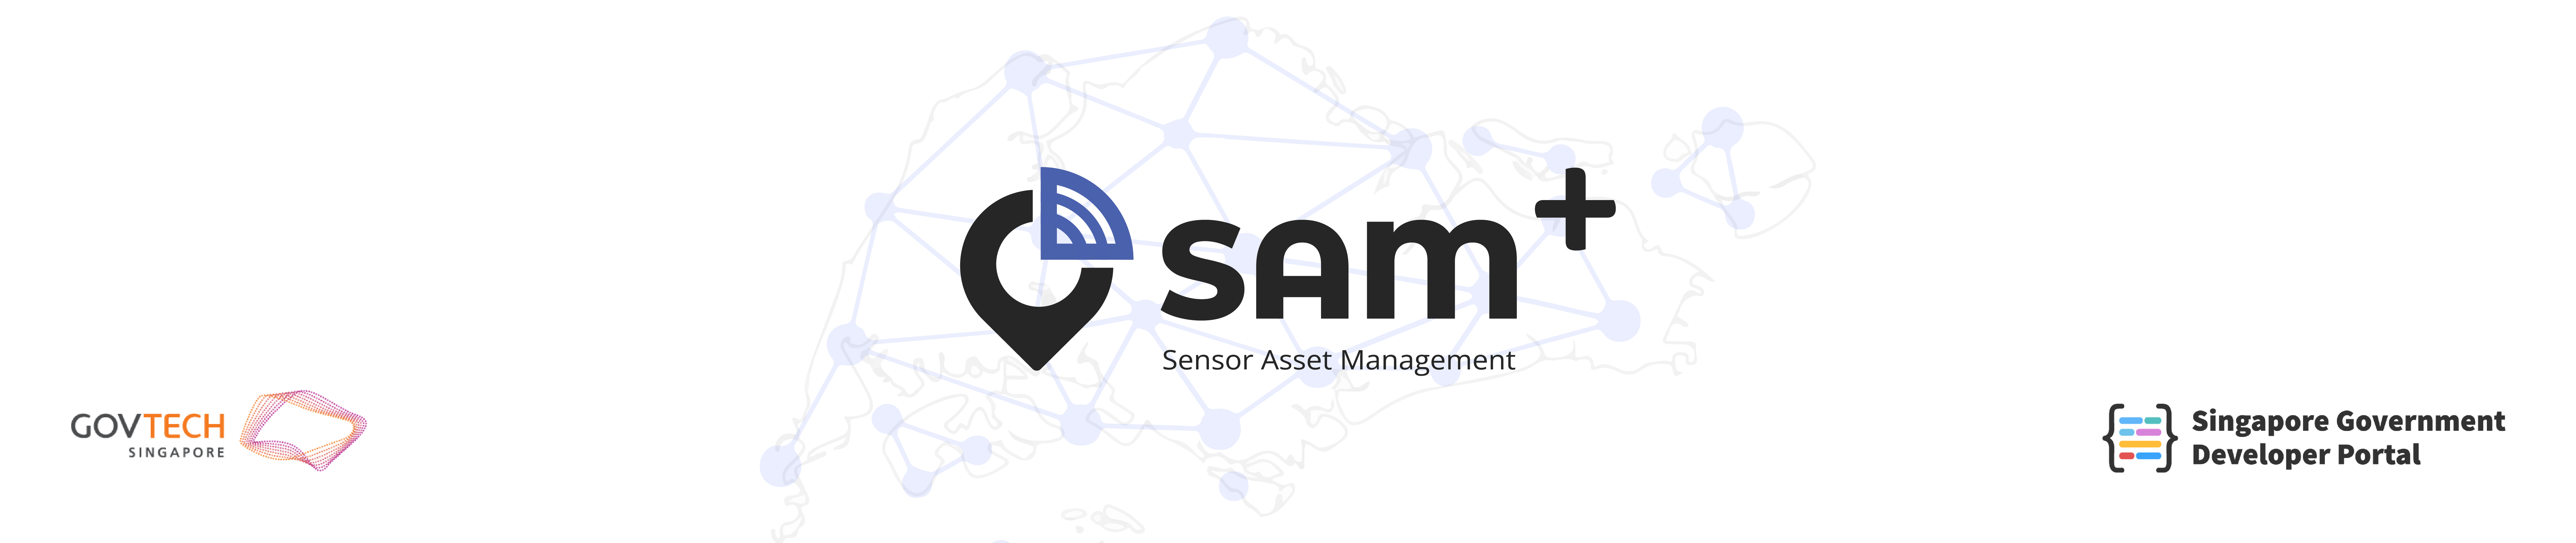 Sensor Asset Management banner